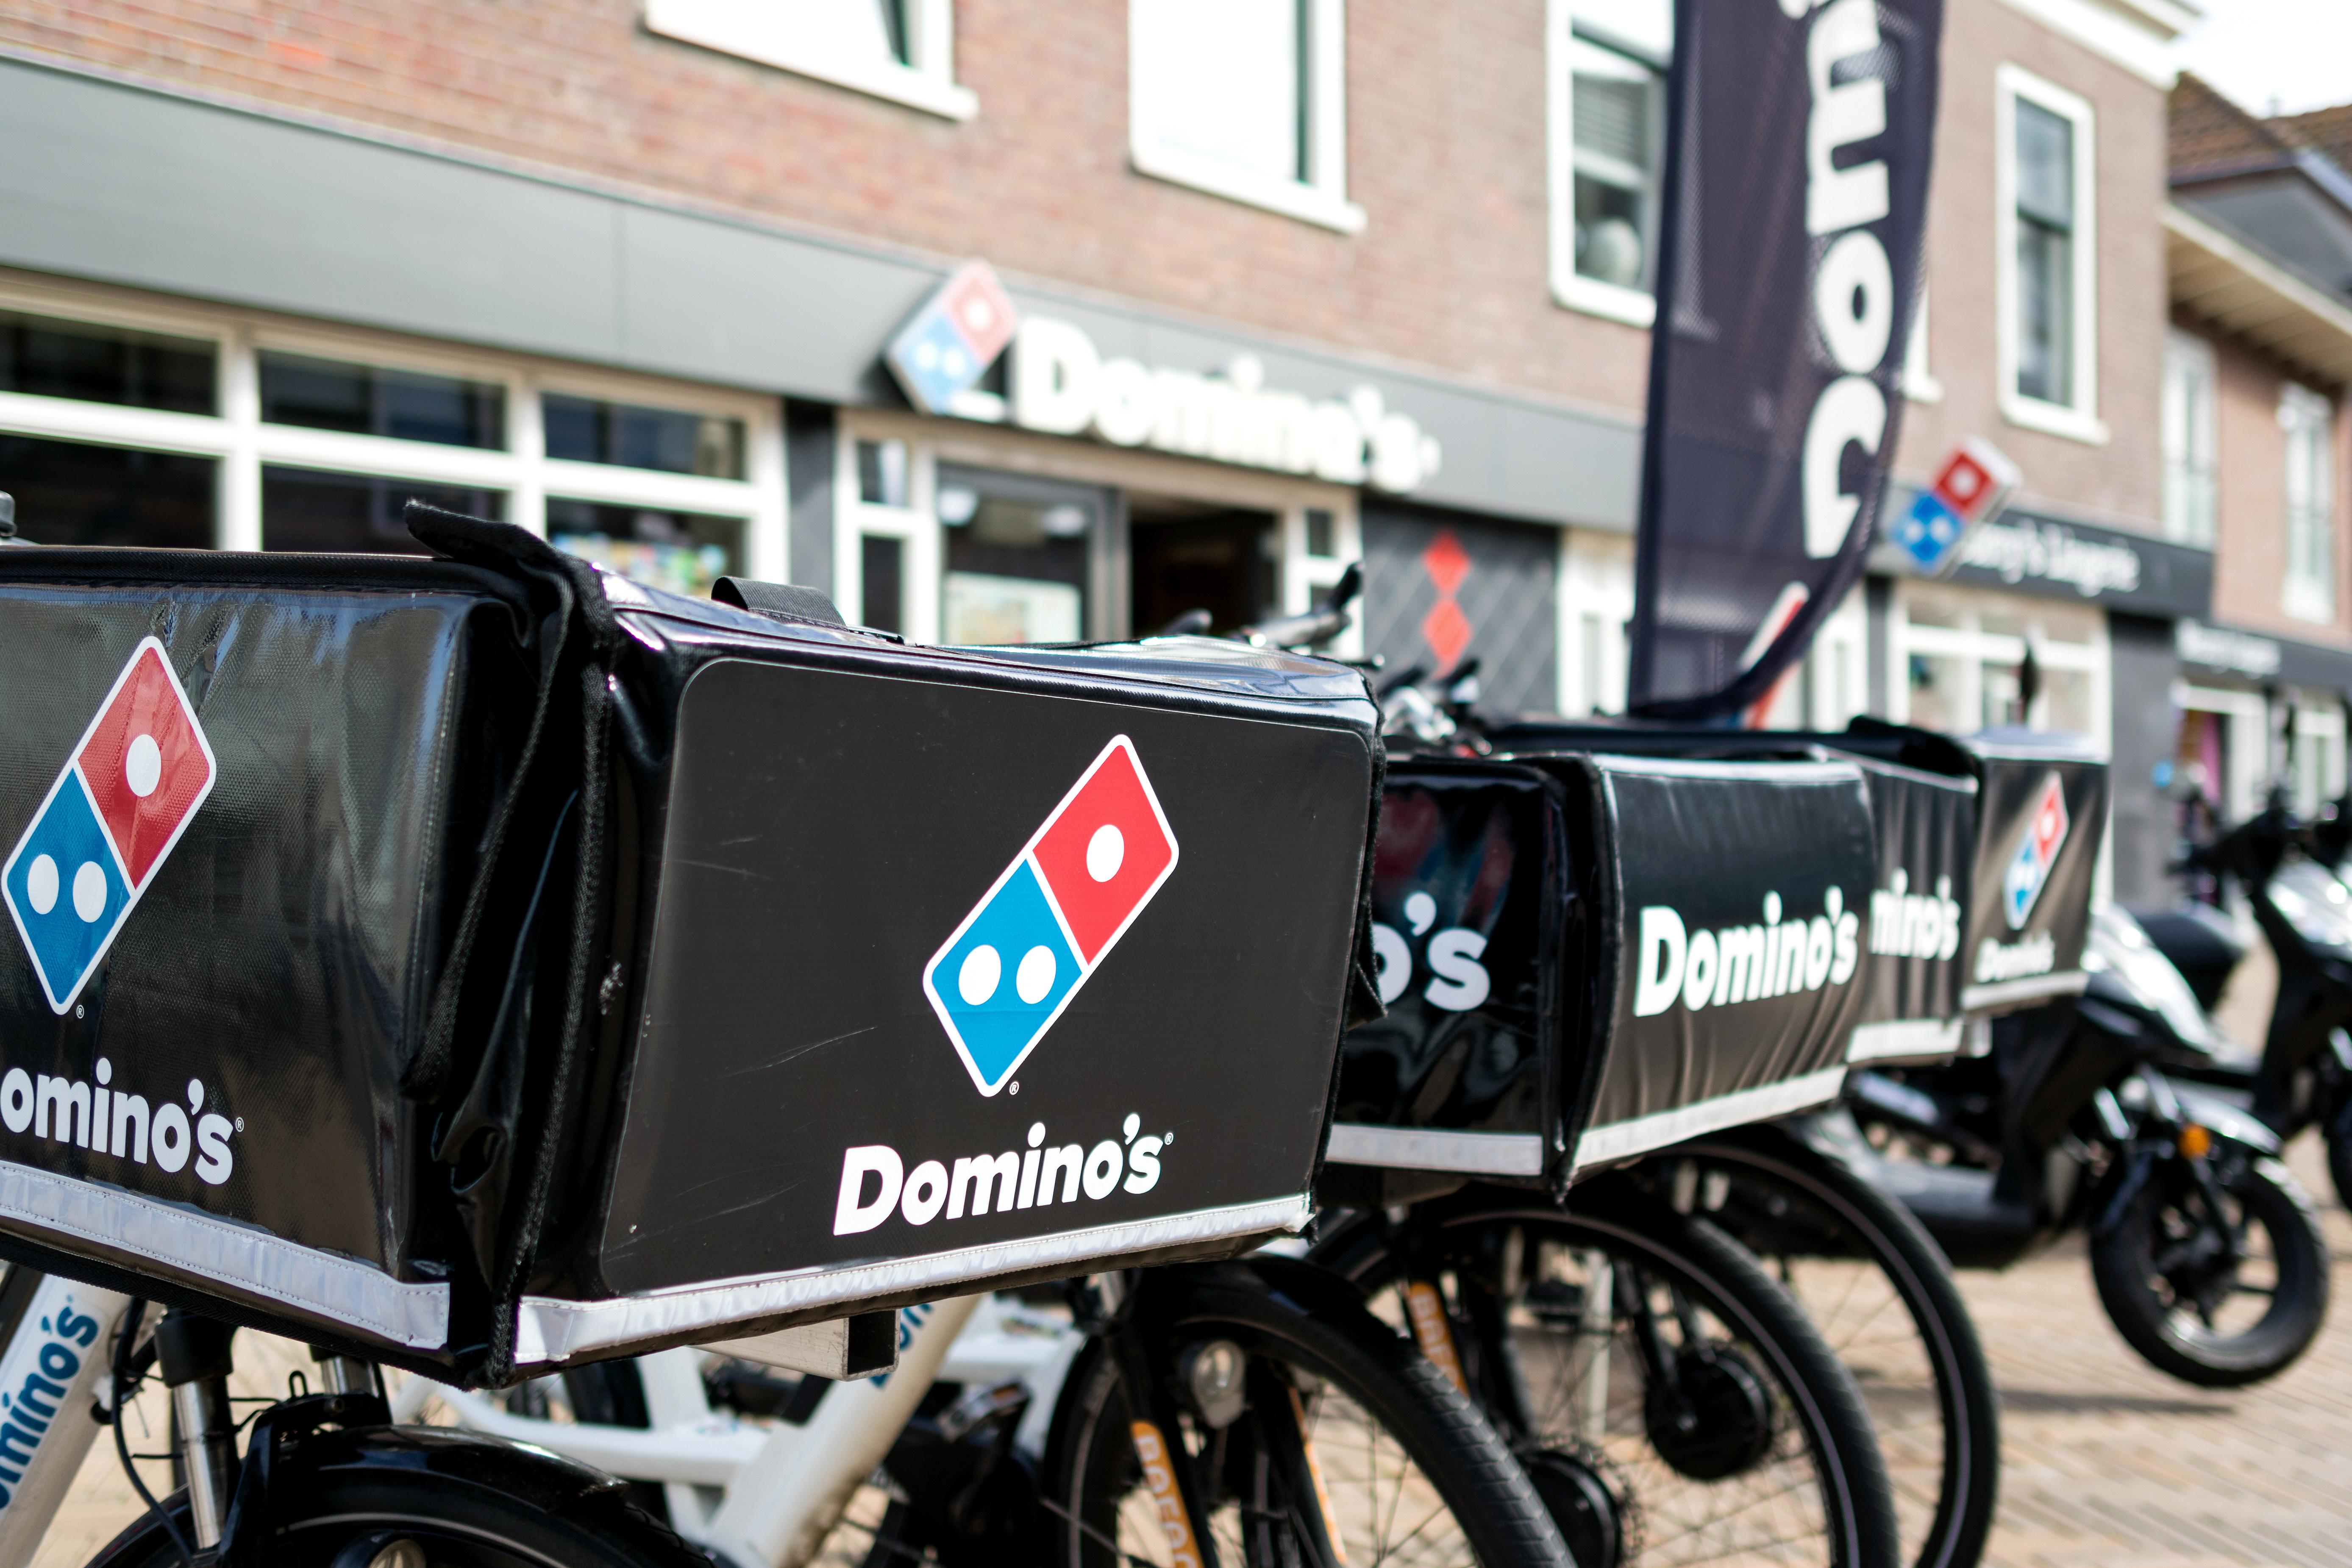 uploads///Dominos Pizza stock